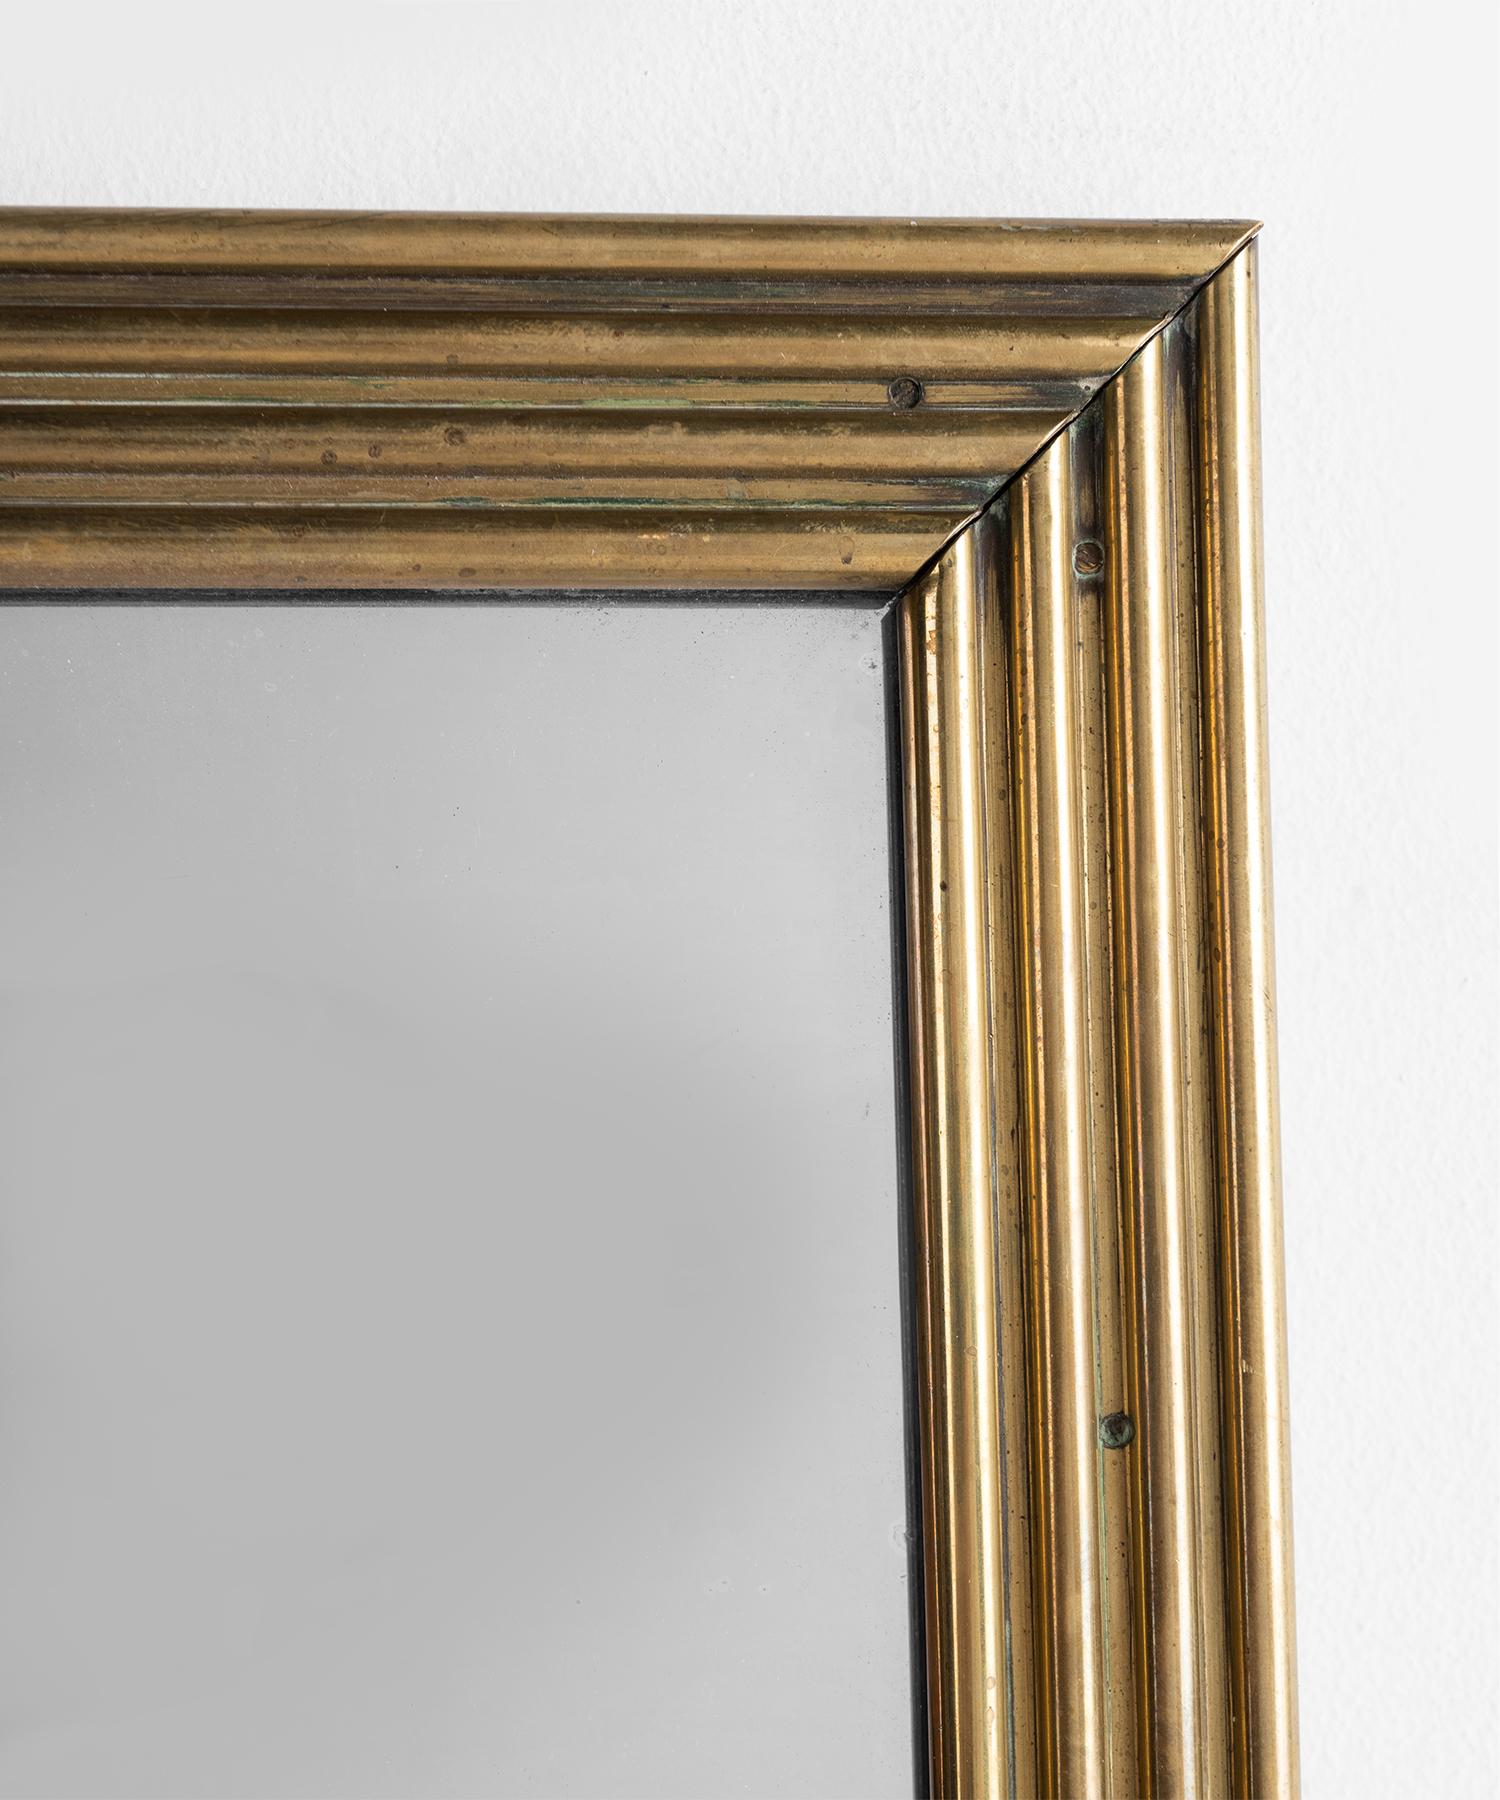 Reeded brass frame bistro mirror, Italy circa 1930.

Wonderful size with beautiful, decorative frame.